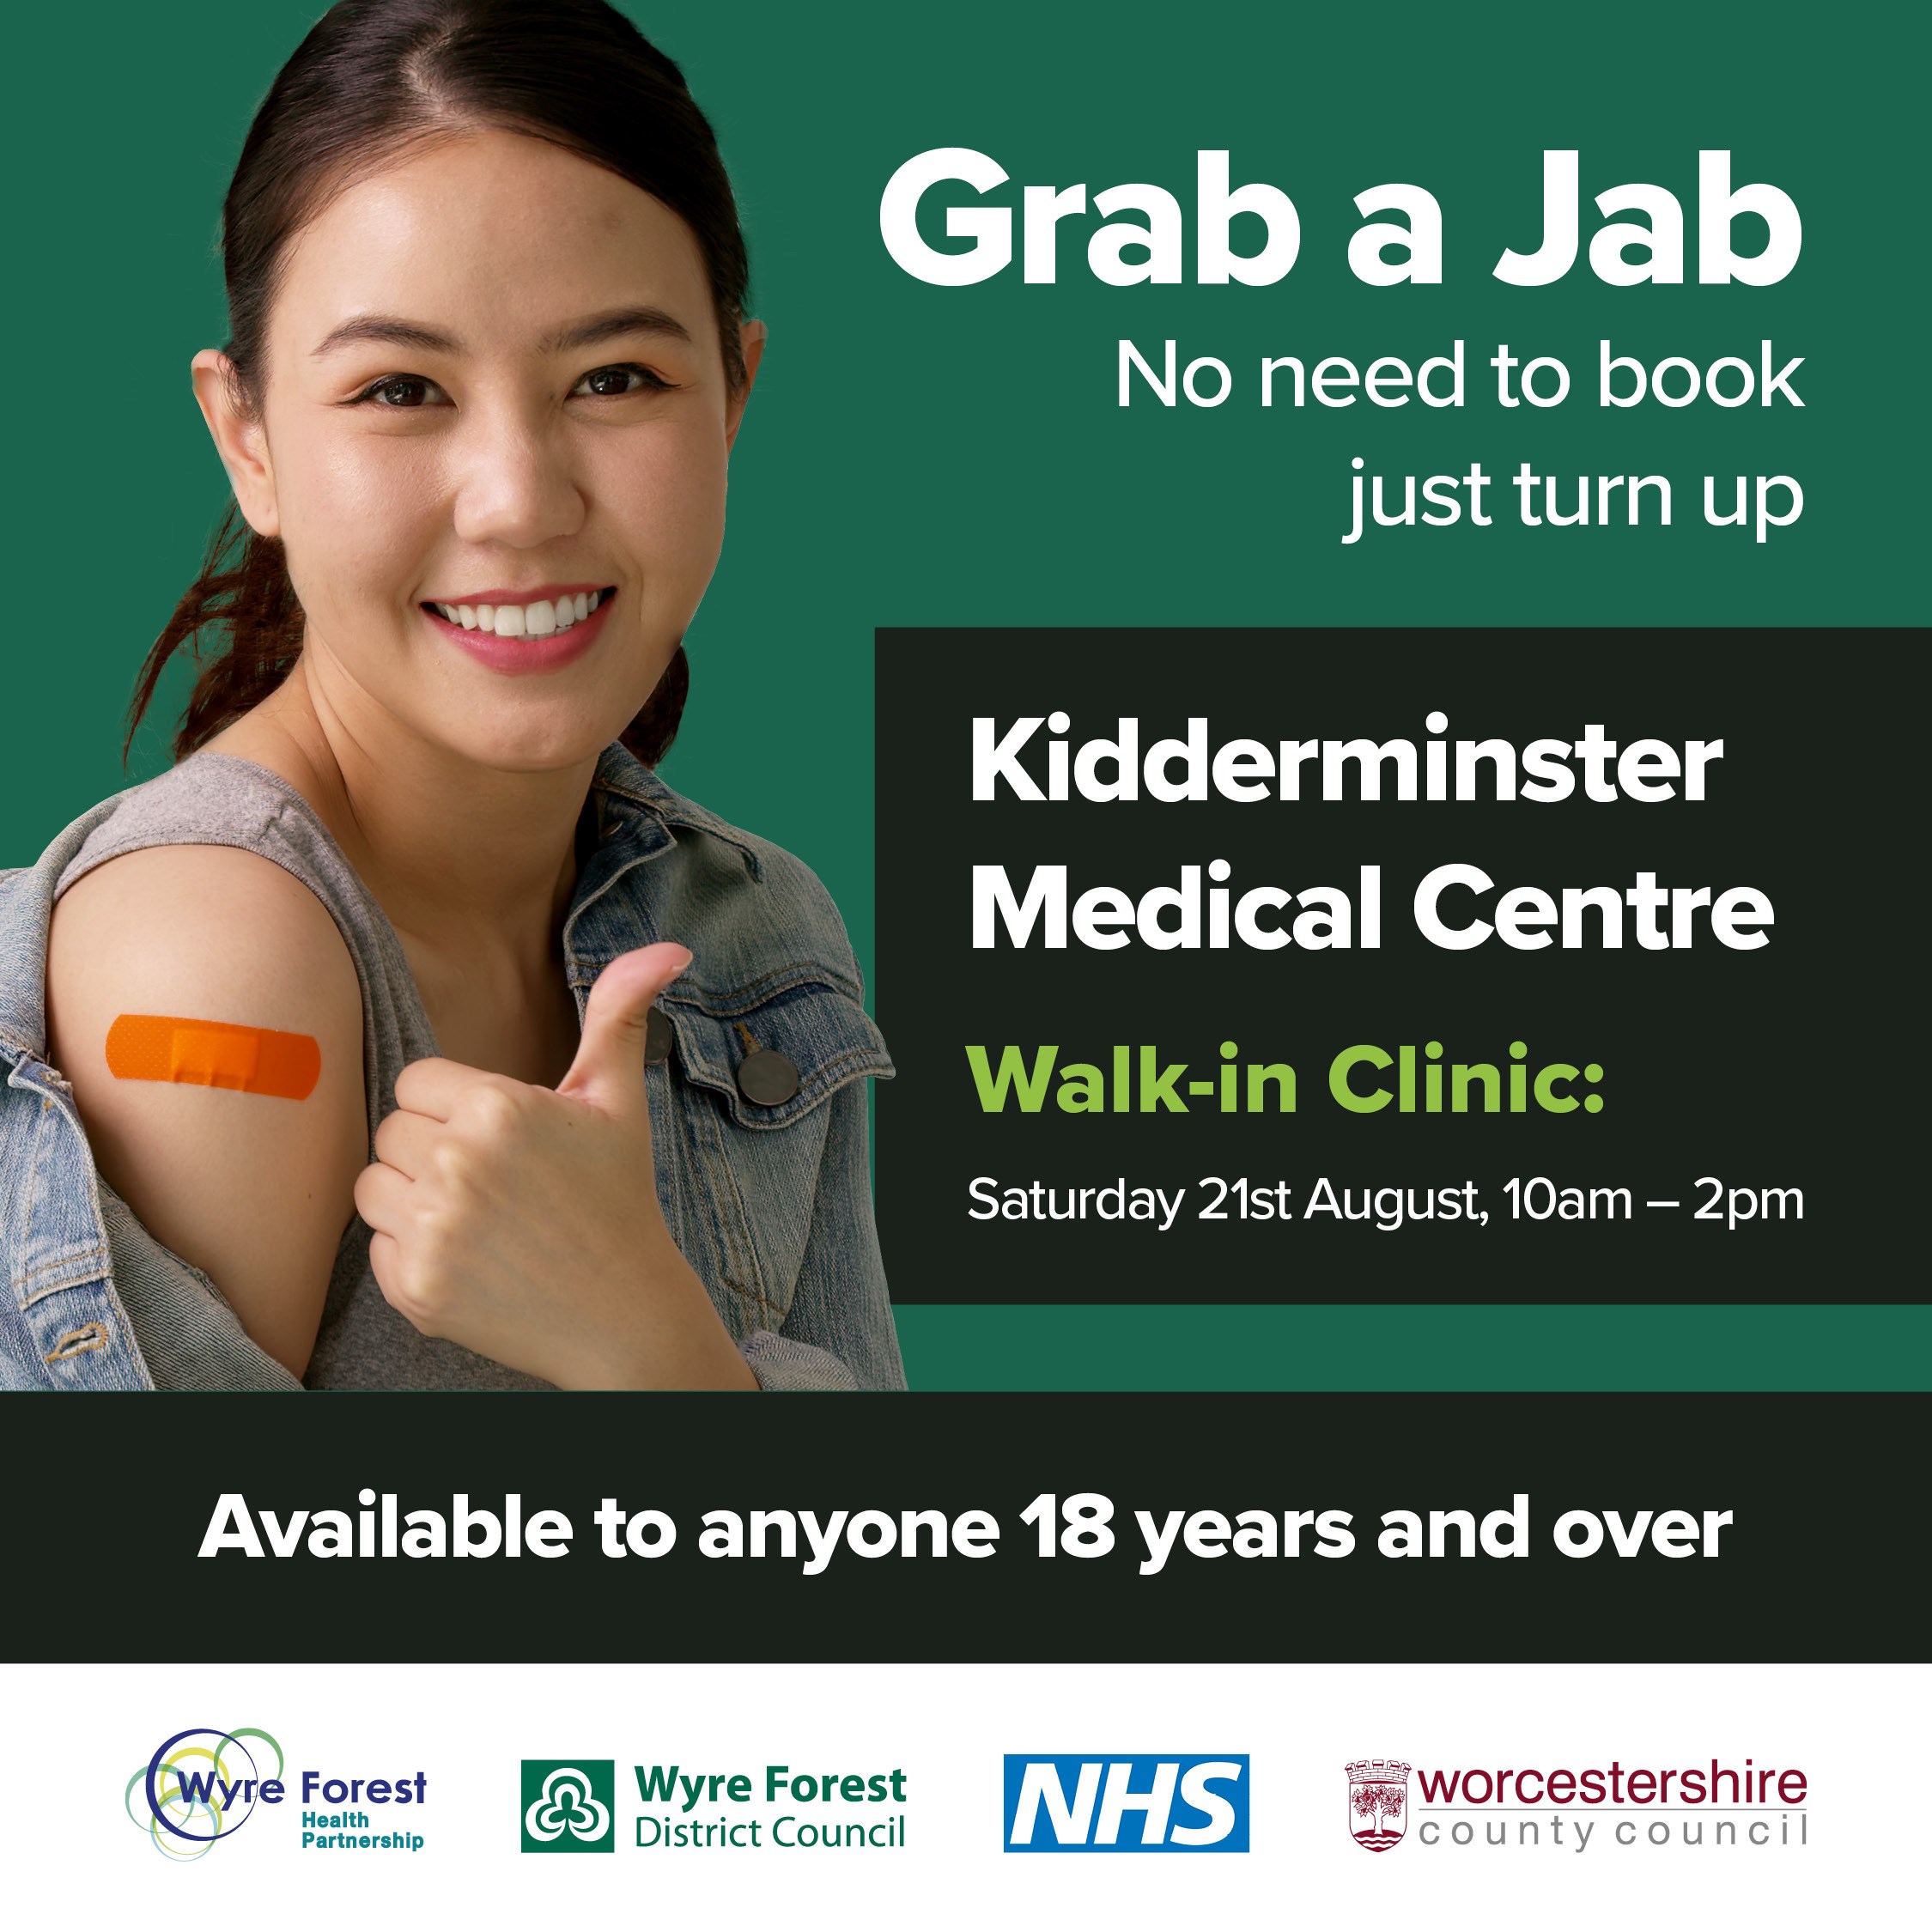 Grab a Jab, Kidderminster Medical Centre, 10am to 2pm